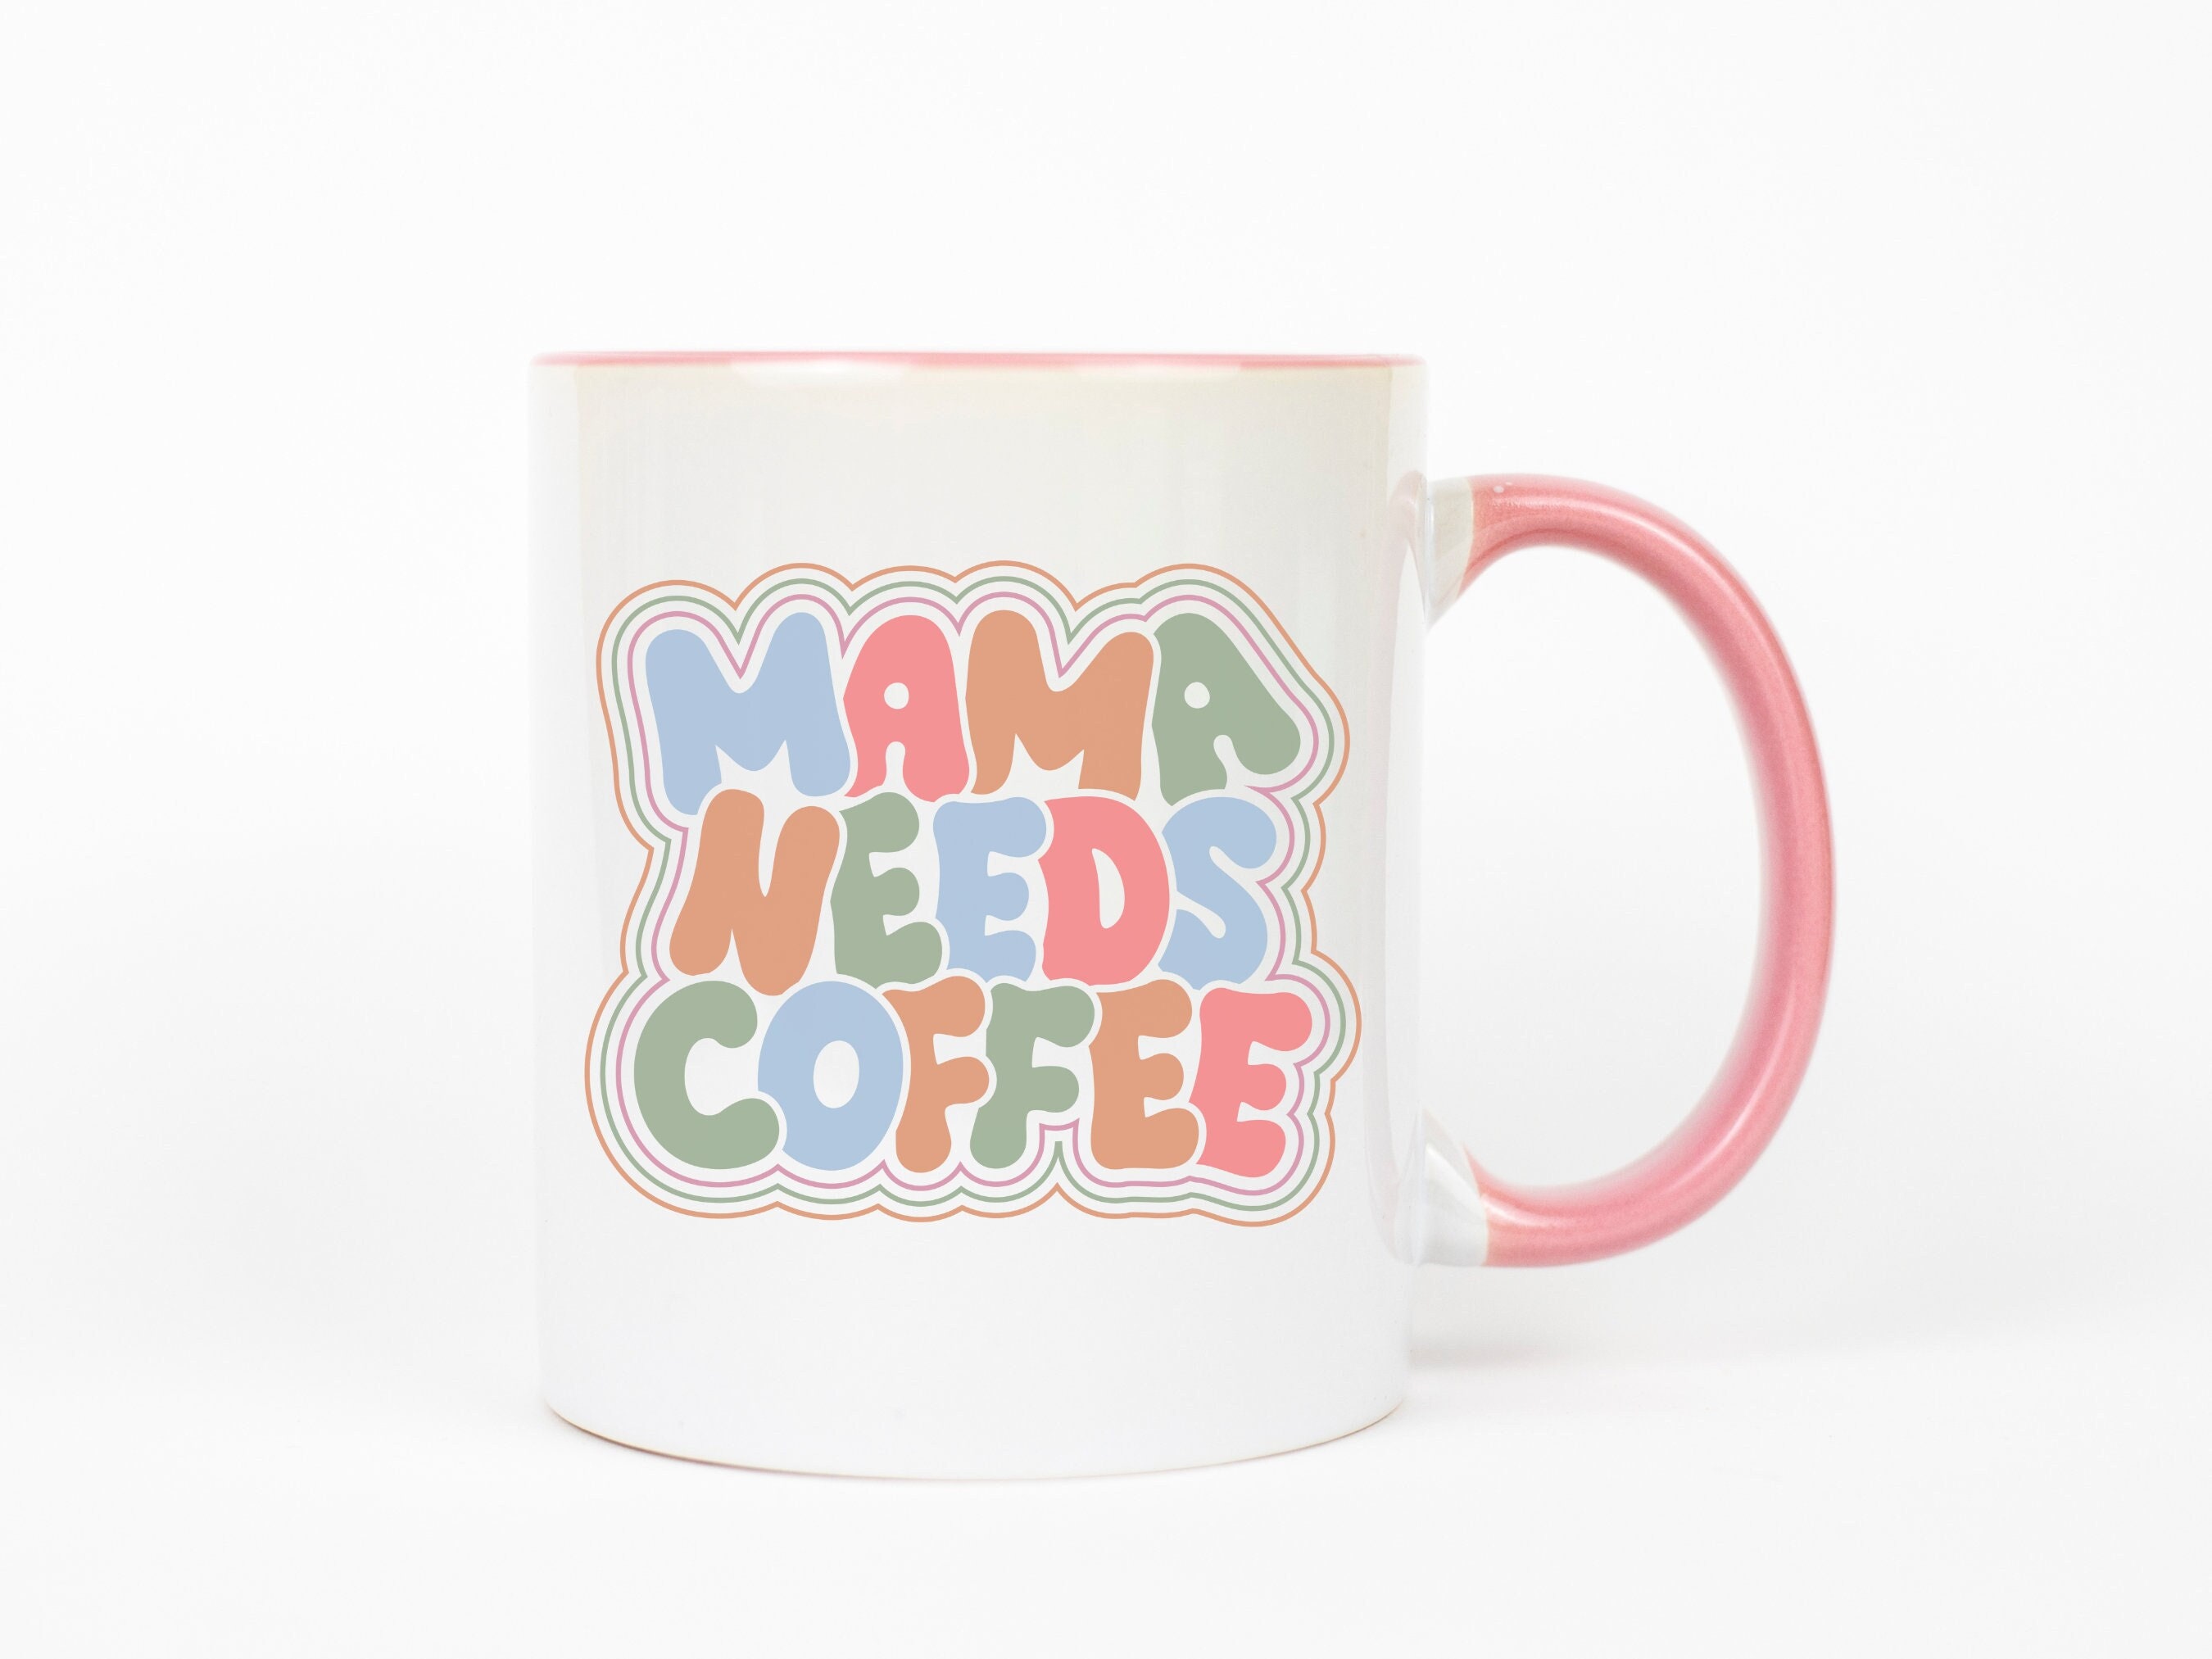 Hot Mama Coffee Mug – Drink It Dirty